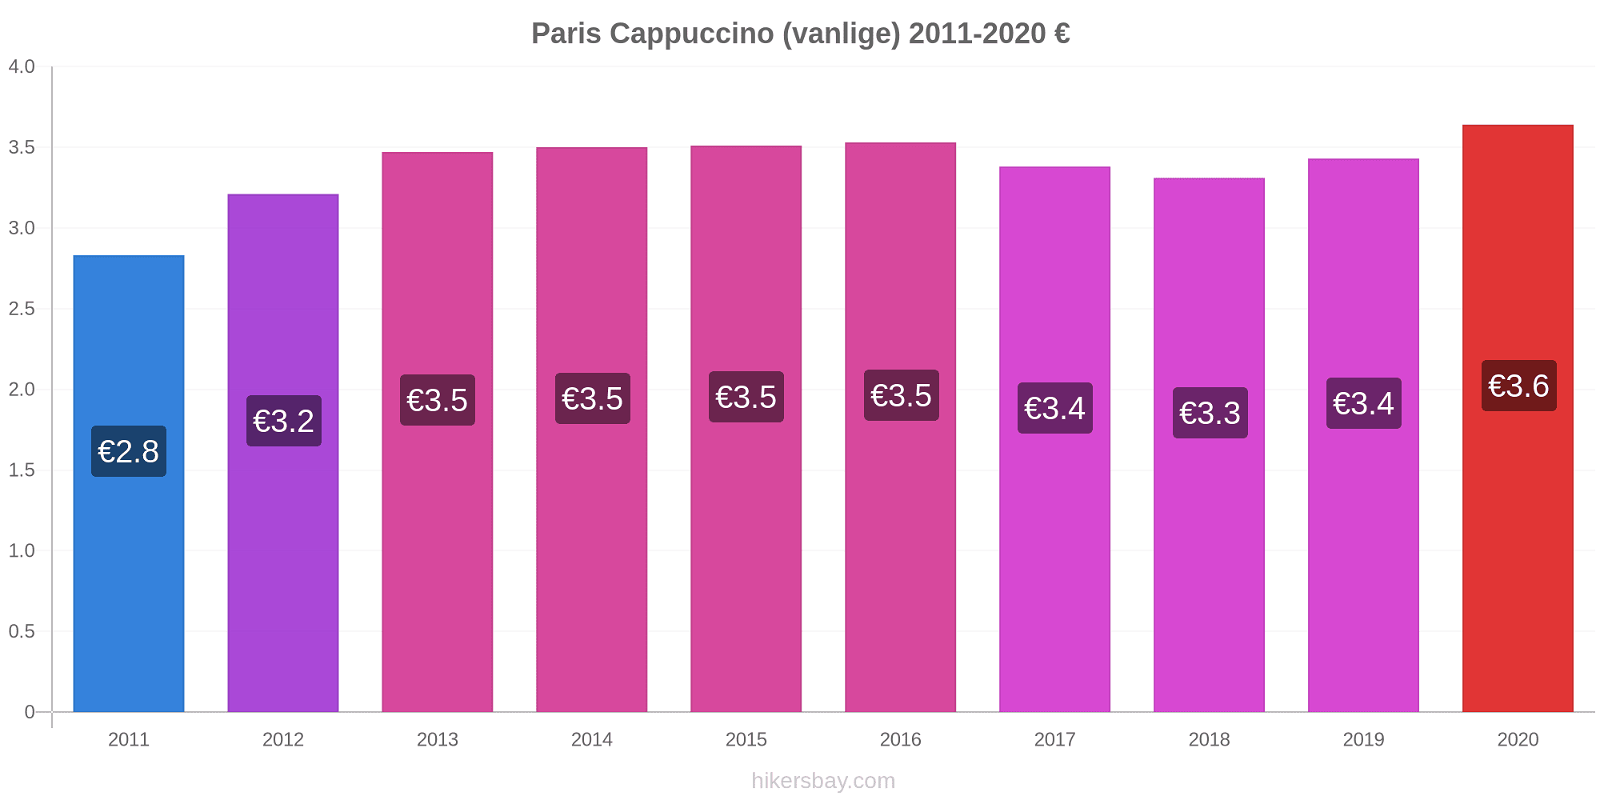 Paris prisendringer Cappuccino (vanlige) hikersbay.com